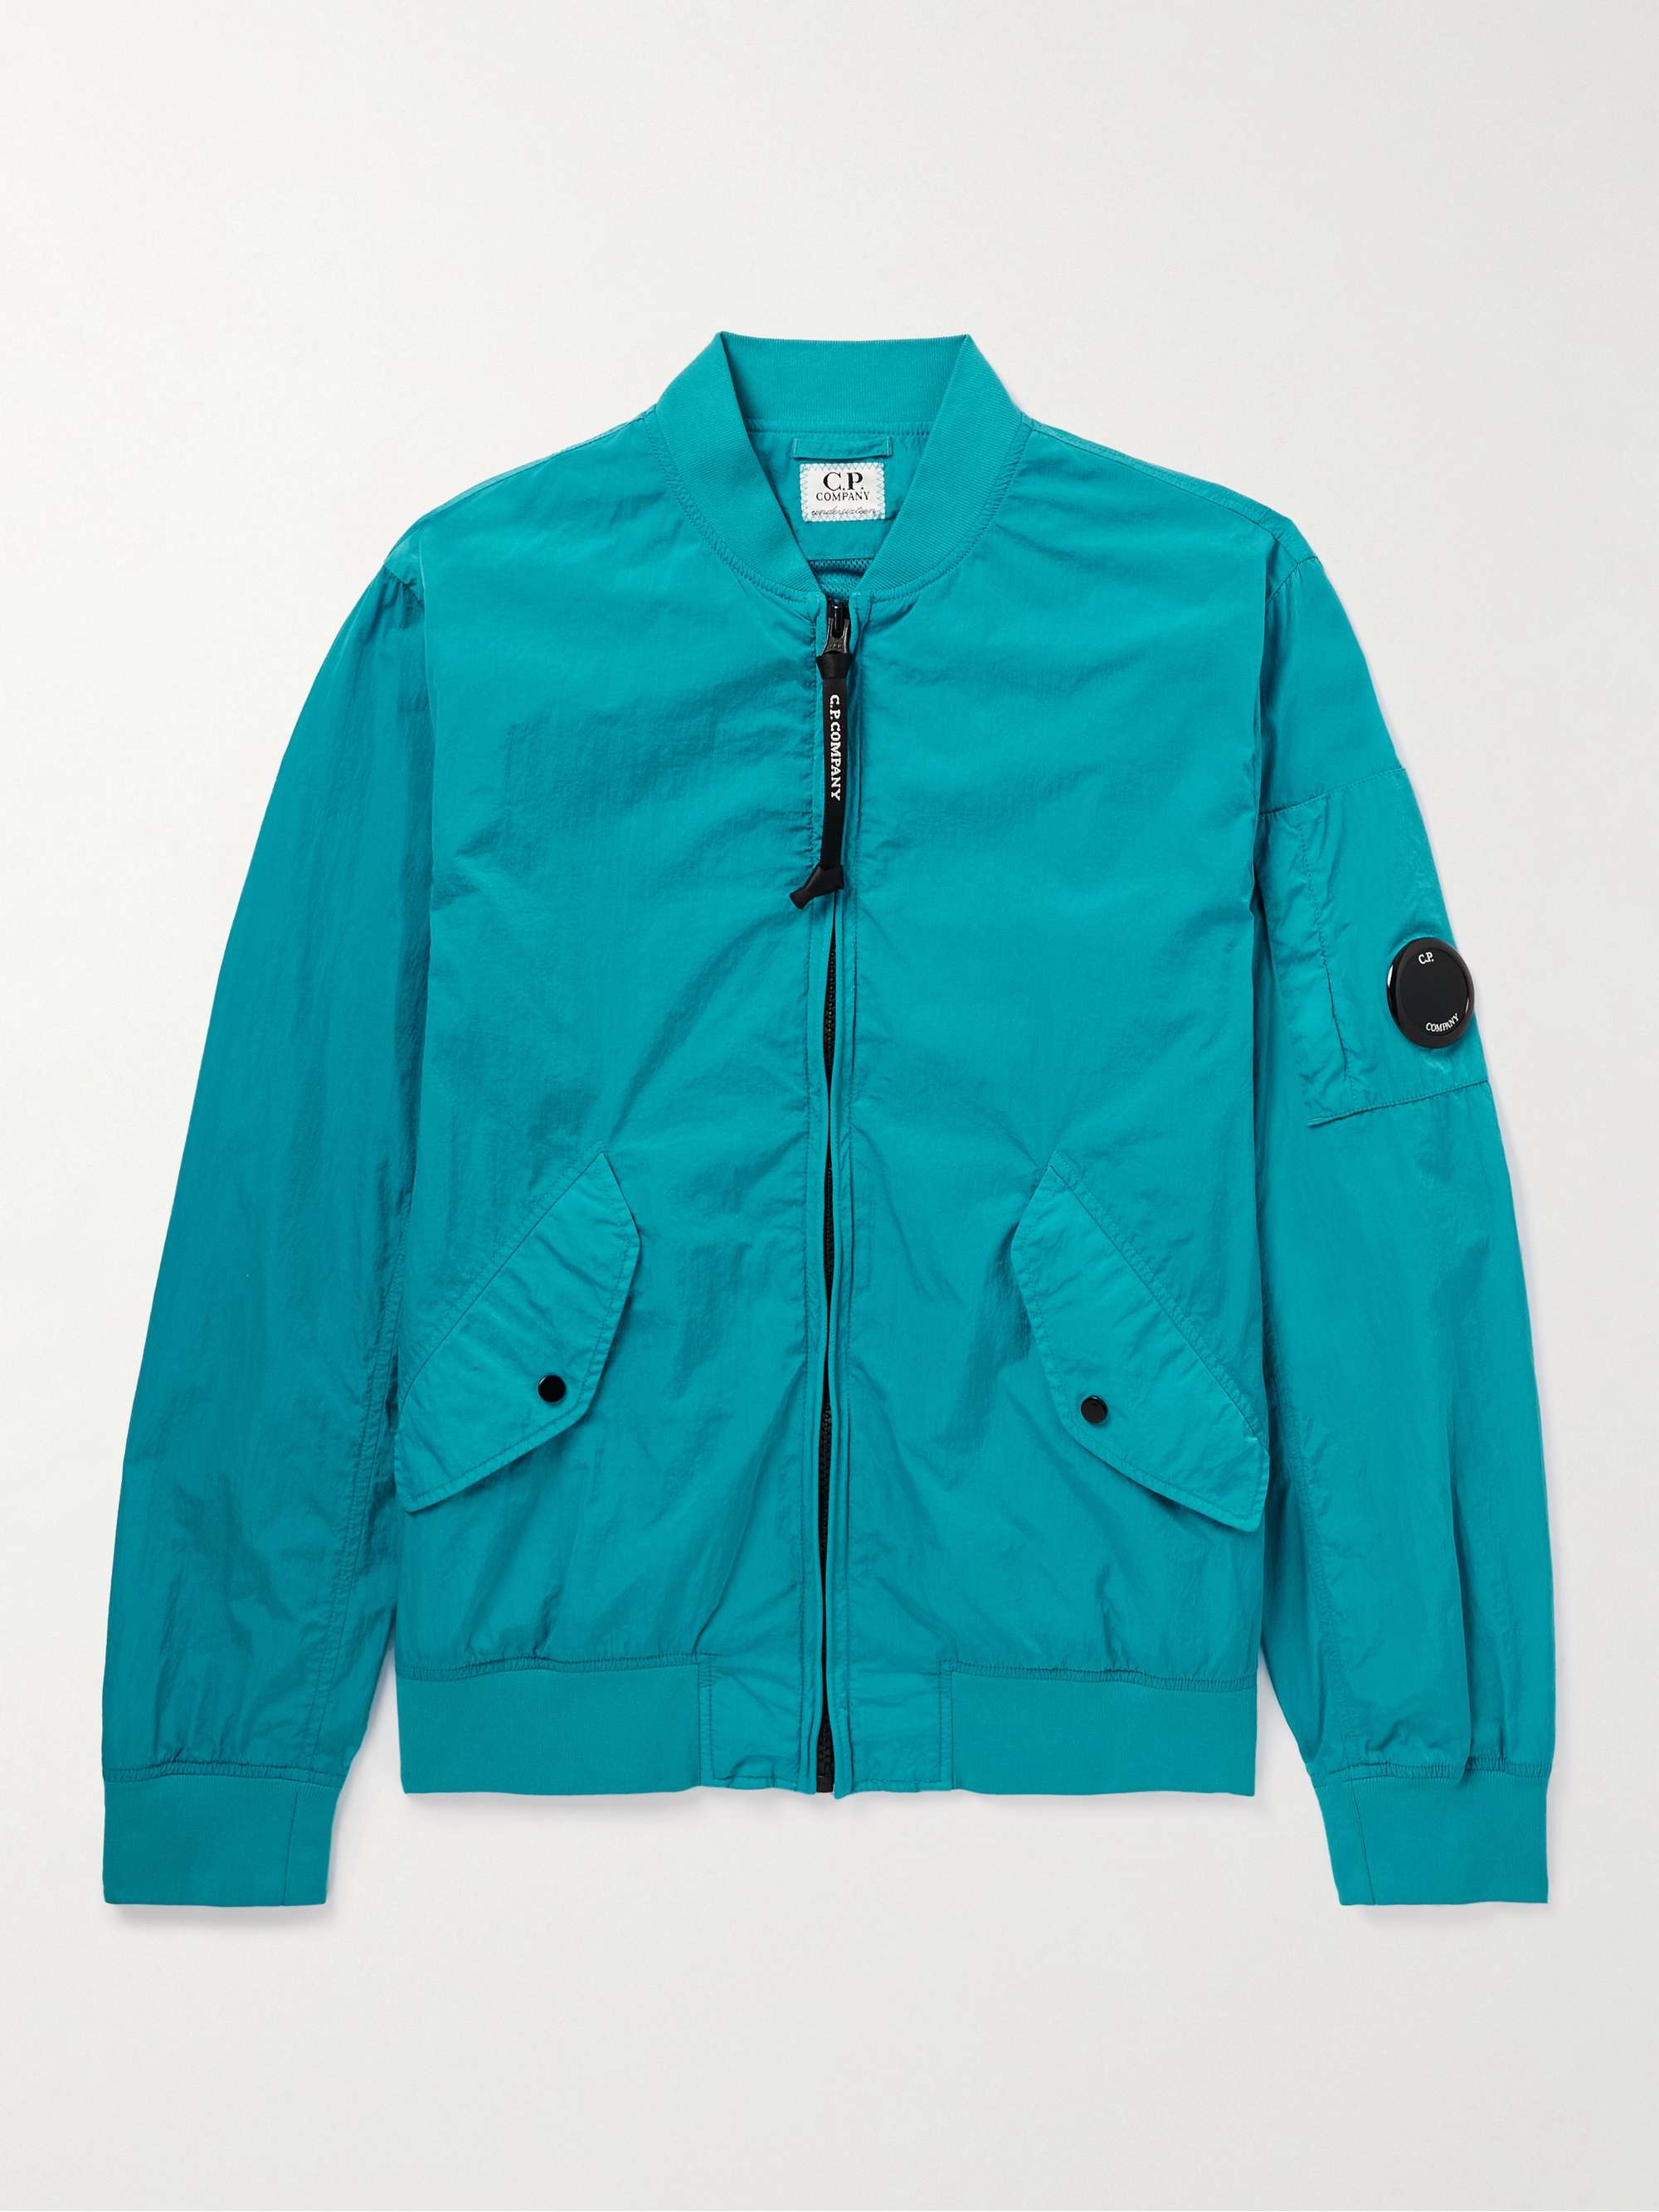 C.P. COMPANY KIDS Ages 12-14 Garment-Dyed Chrome-R Bomber Jacket | MR PORTER